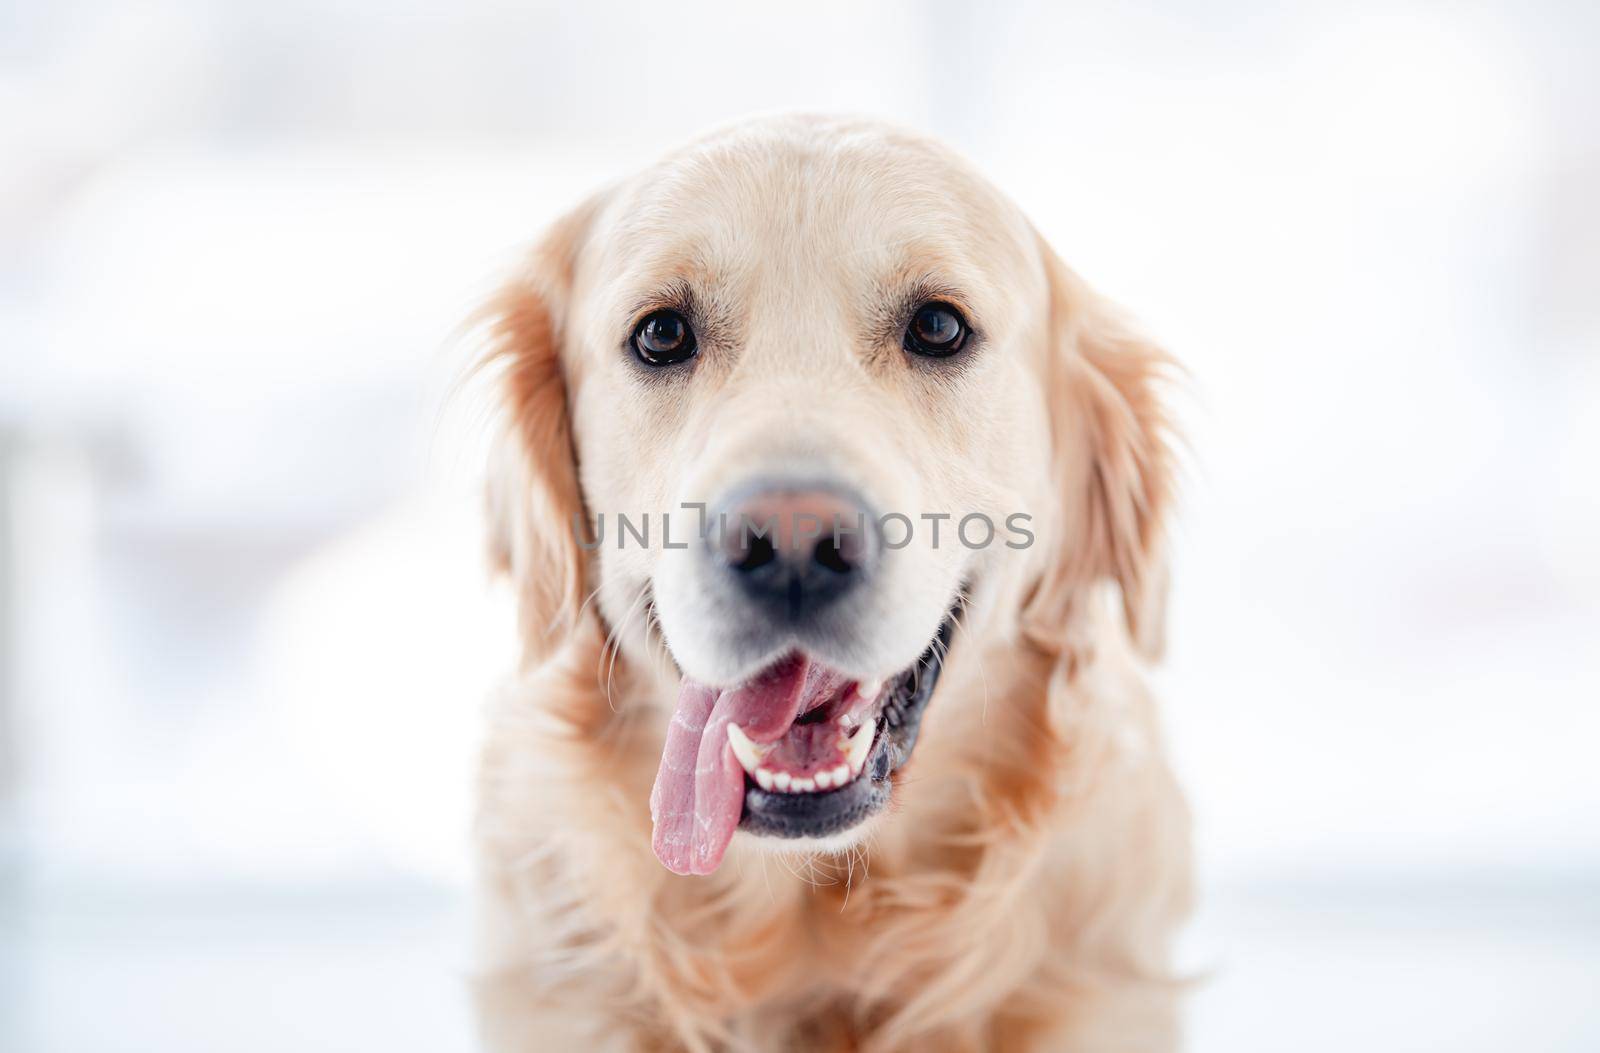 Golden retriever dog isolated on white background by tan4ikk1